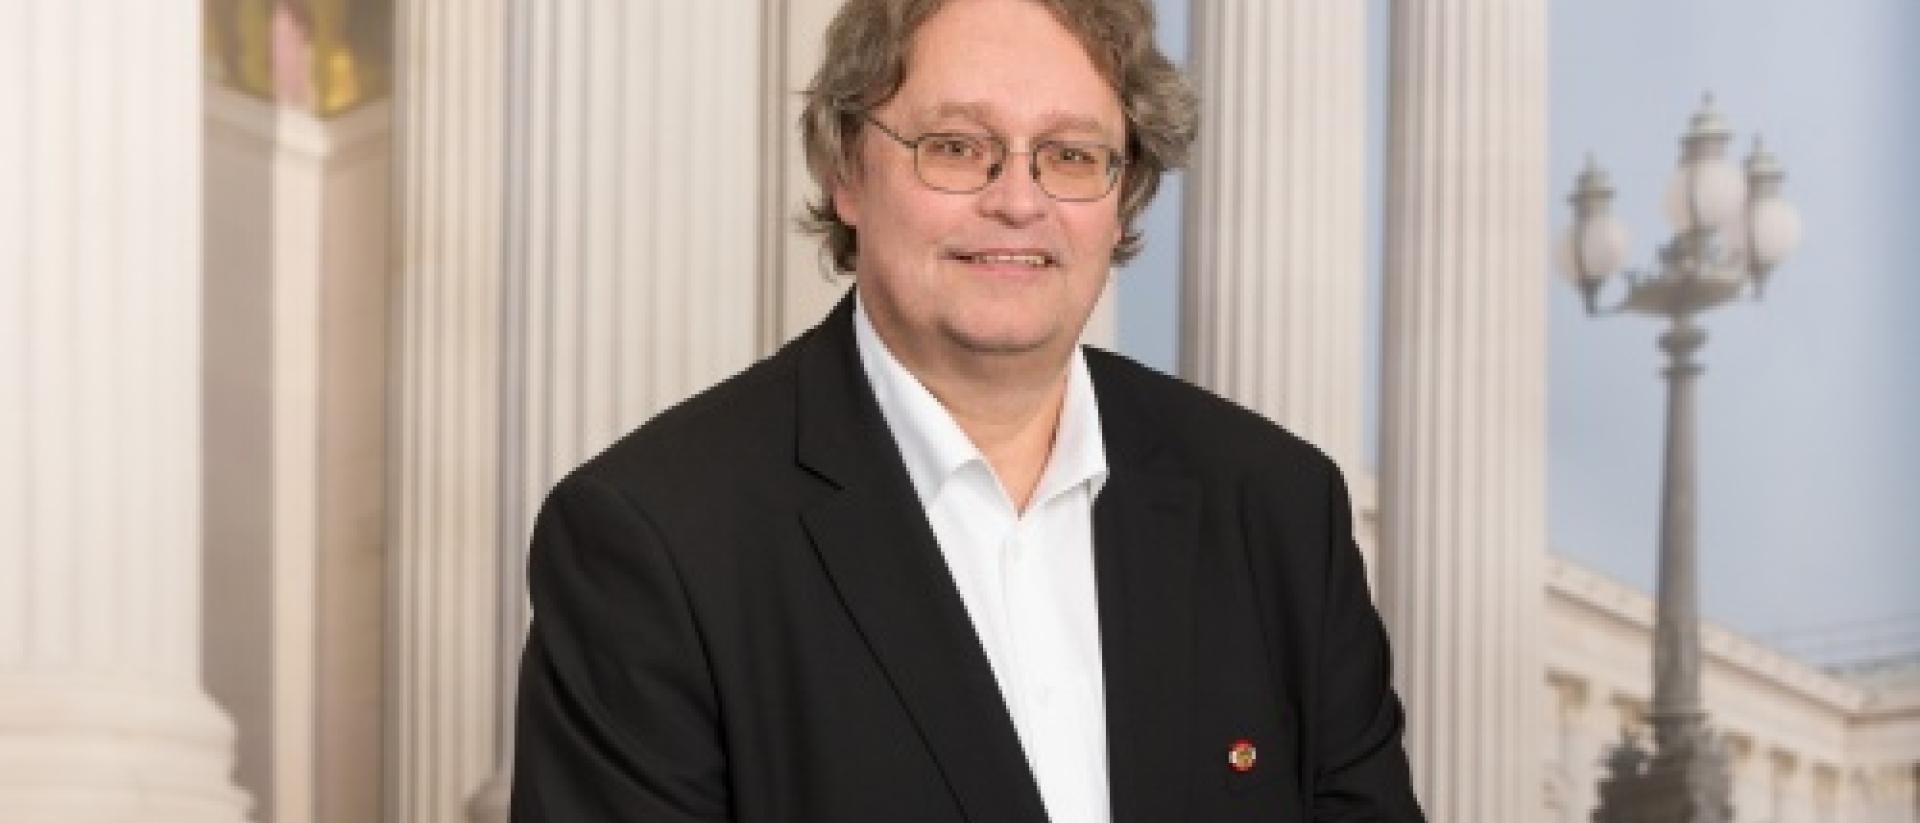 Peter Kolba, ehemaliger Nationalrat der Liste Pilz